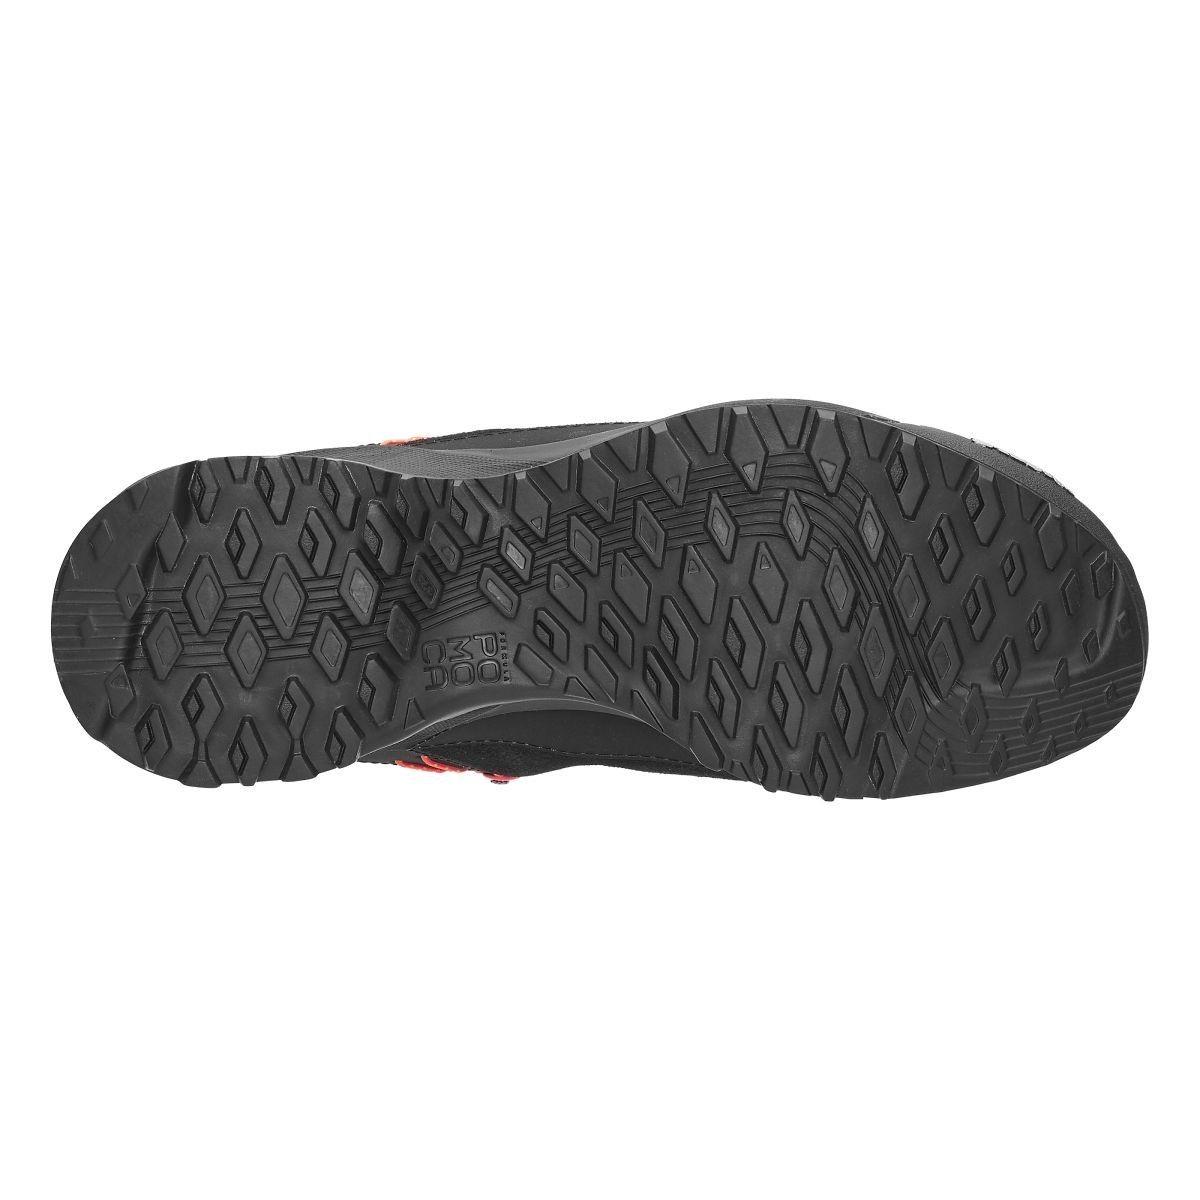 Boty Salewa Wildfire Leather W black/fluo coral Salewa 10020743 L-11